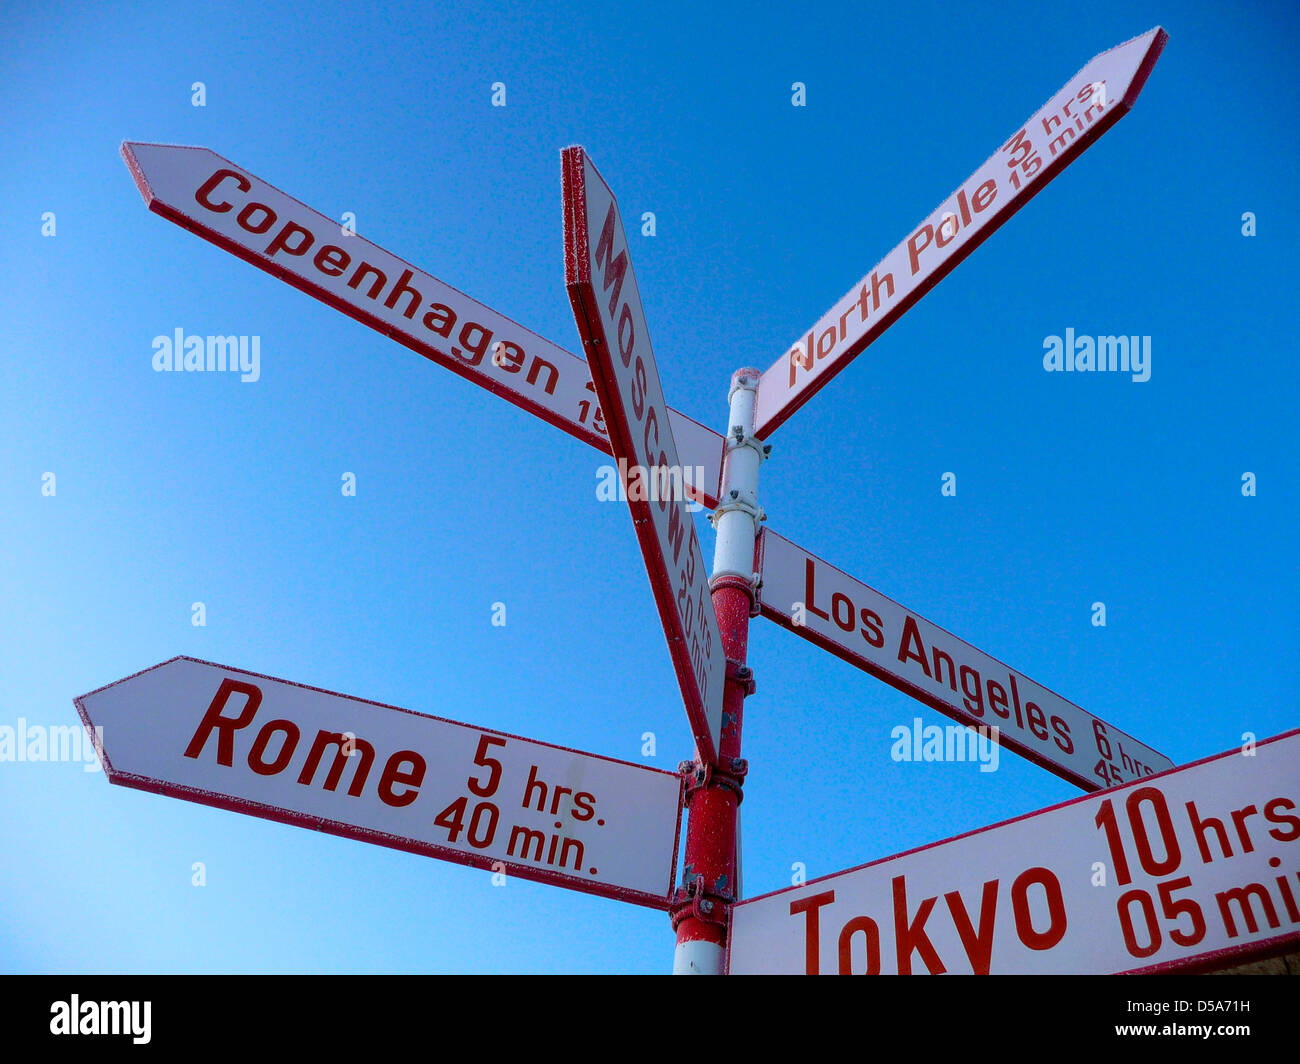 signpost, kangerlussuaq airport, kangerlussuaq, qeqqata kommunia, western greenland, greenland Stock Photo